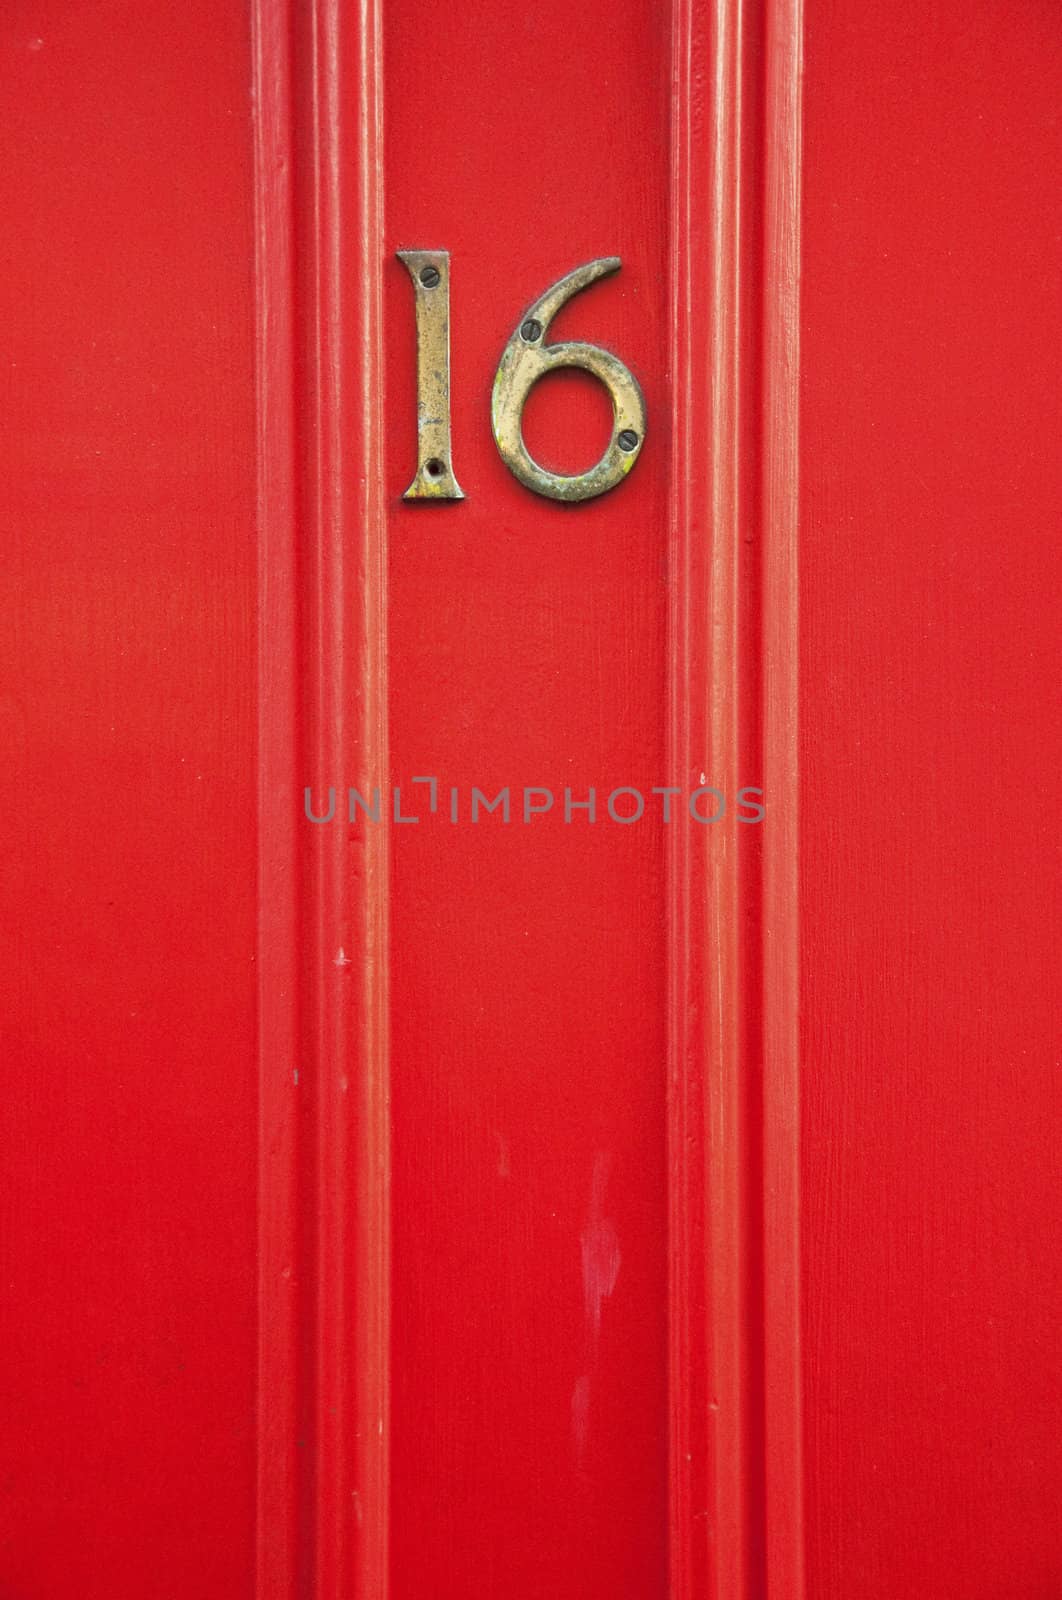 number sixsteen on the old door in London, UK